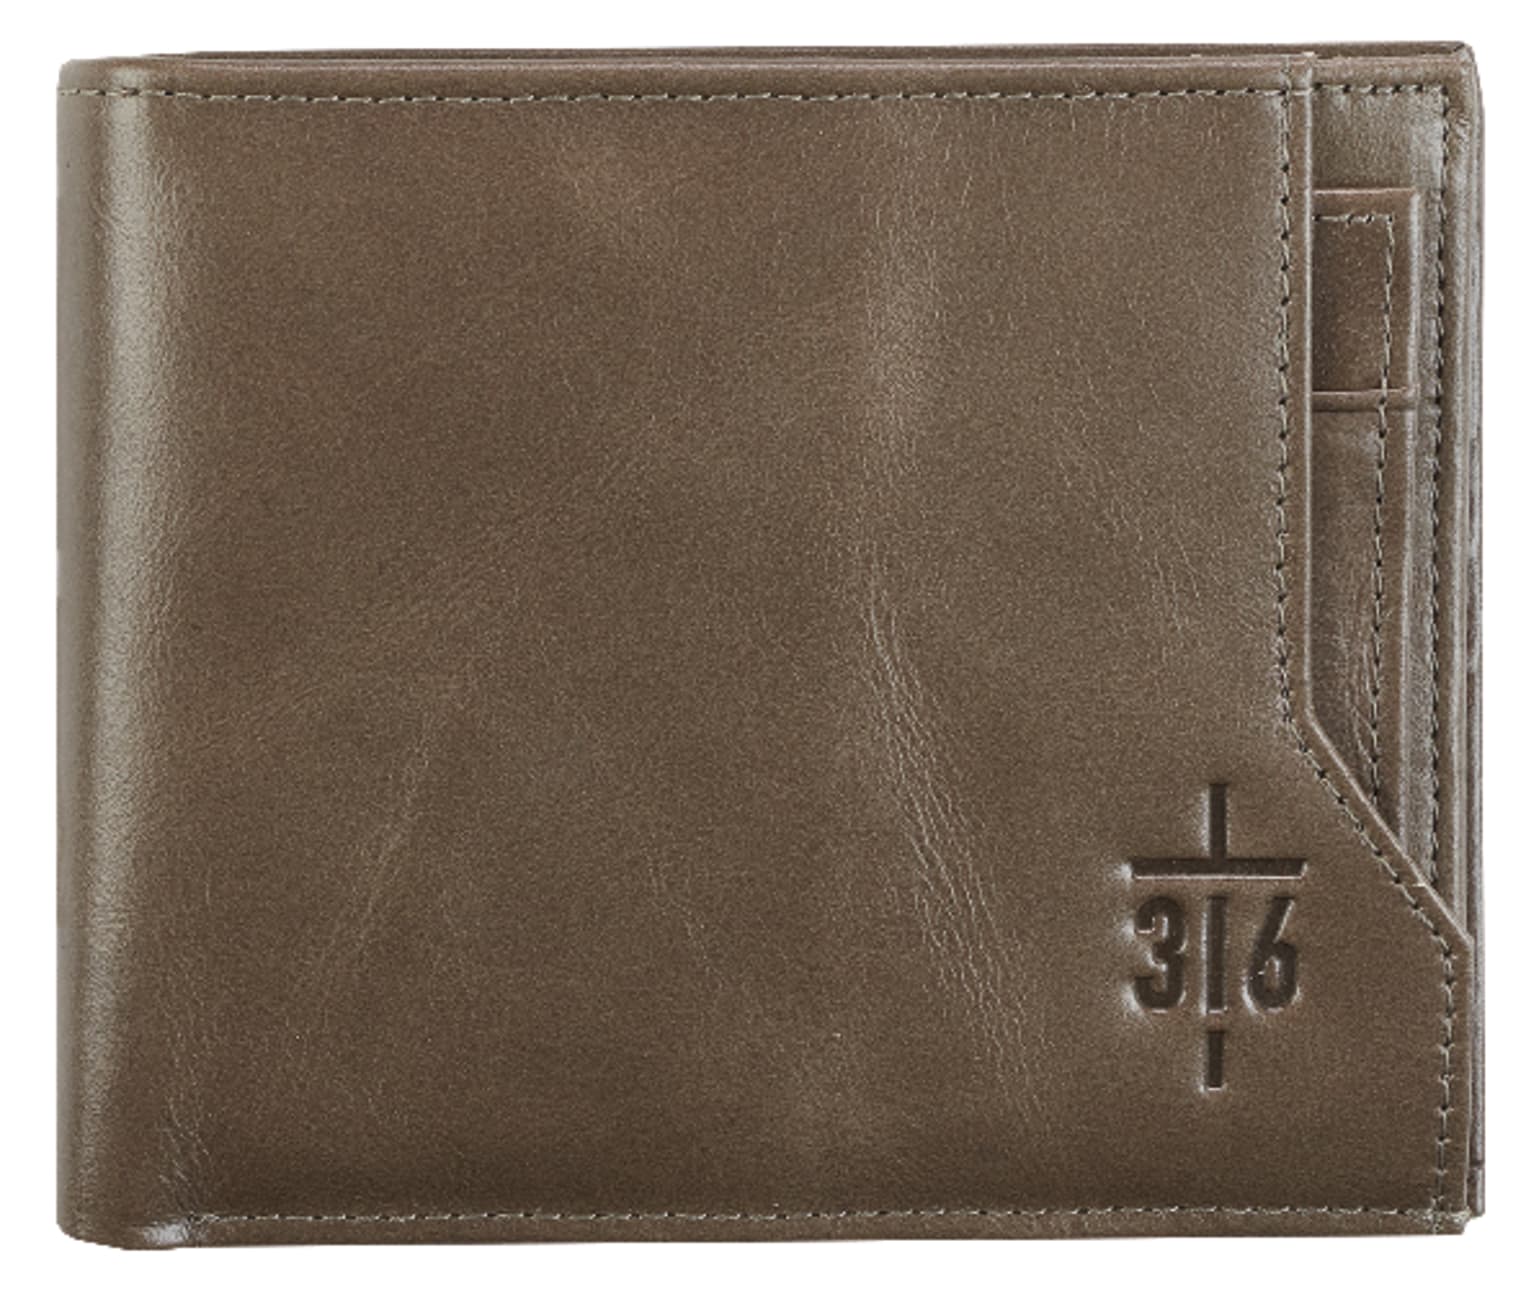 Men's Genuine Leather Wallet: John 3:16 Cross, Brown Clothing